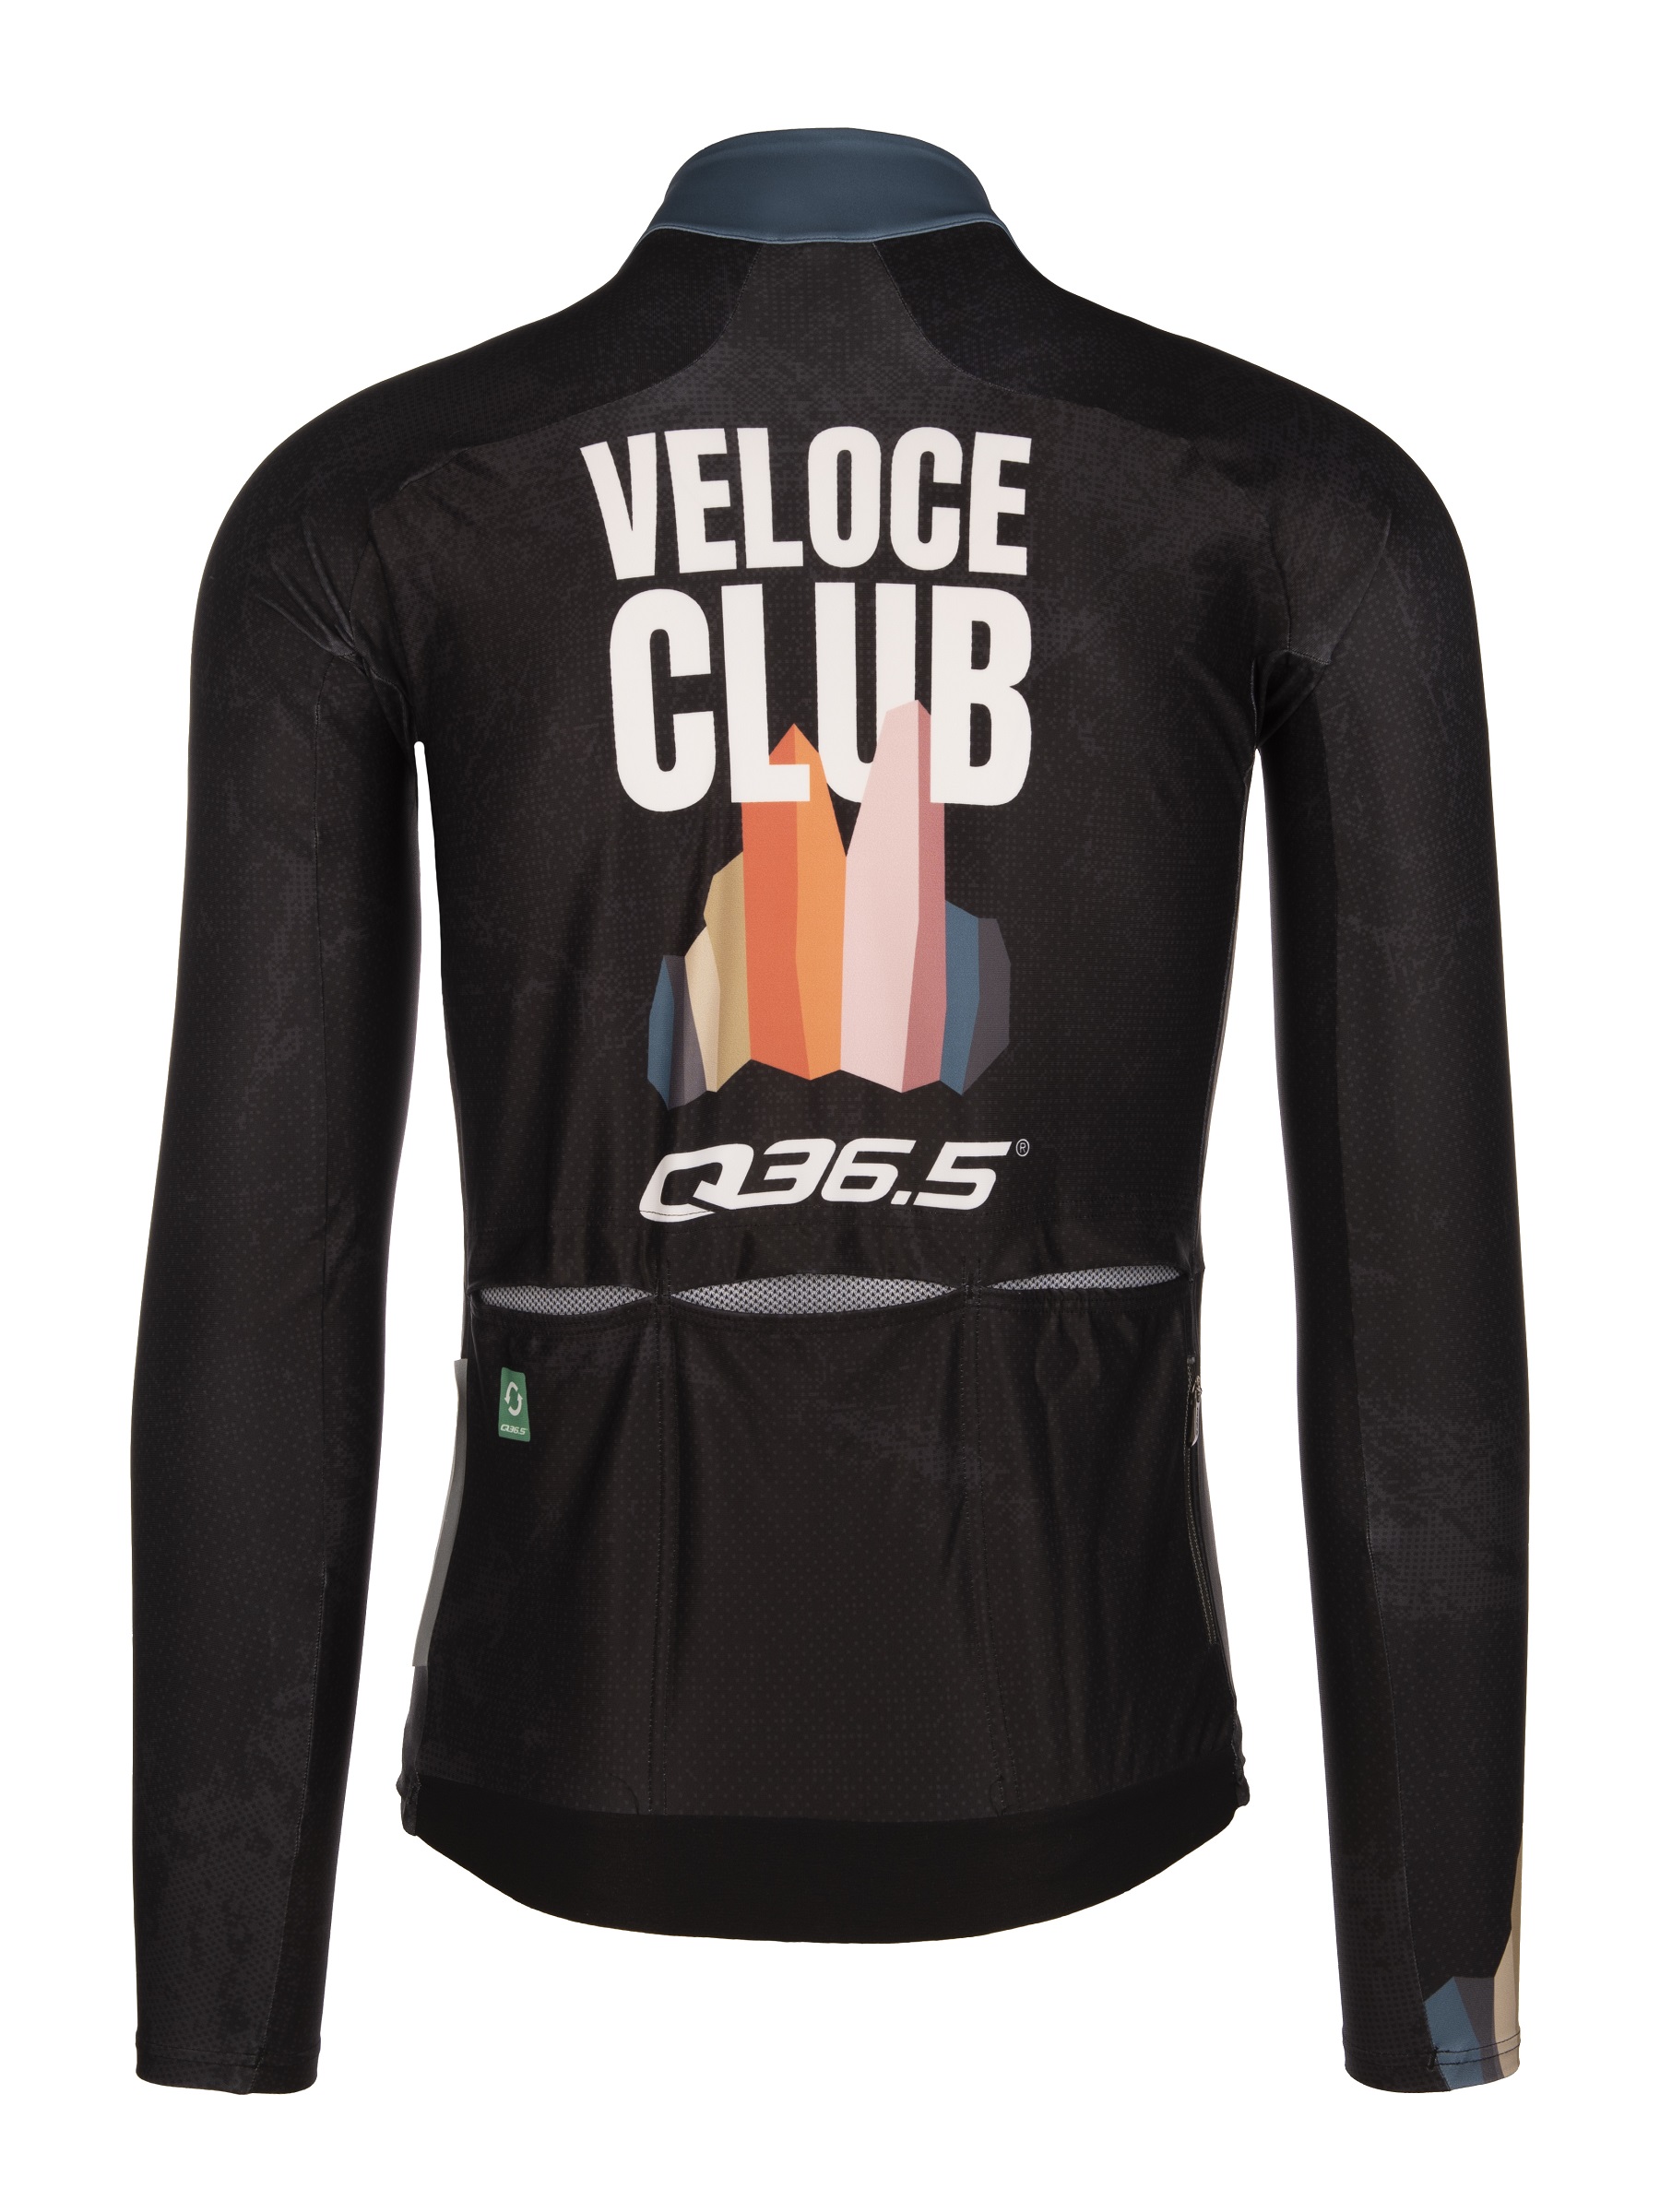 Cycling Jersey long sleeve Veloce Club • Q36.5